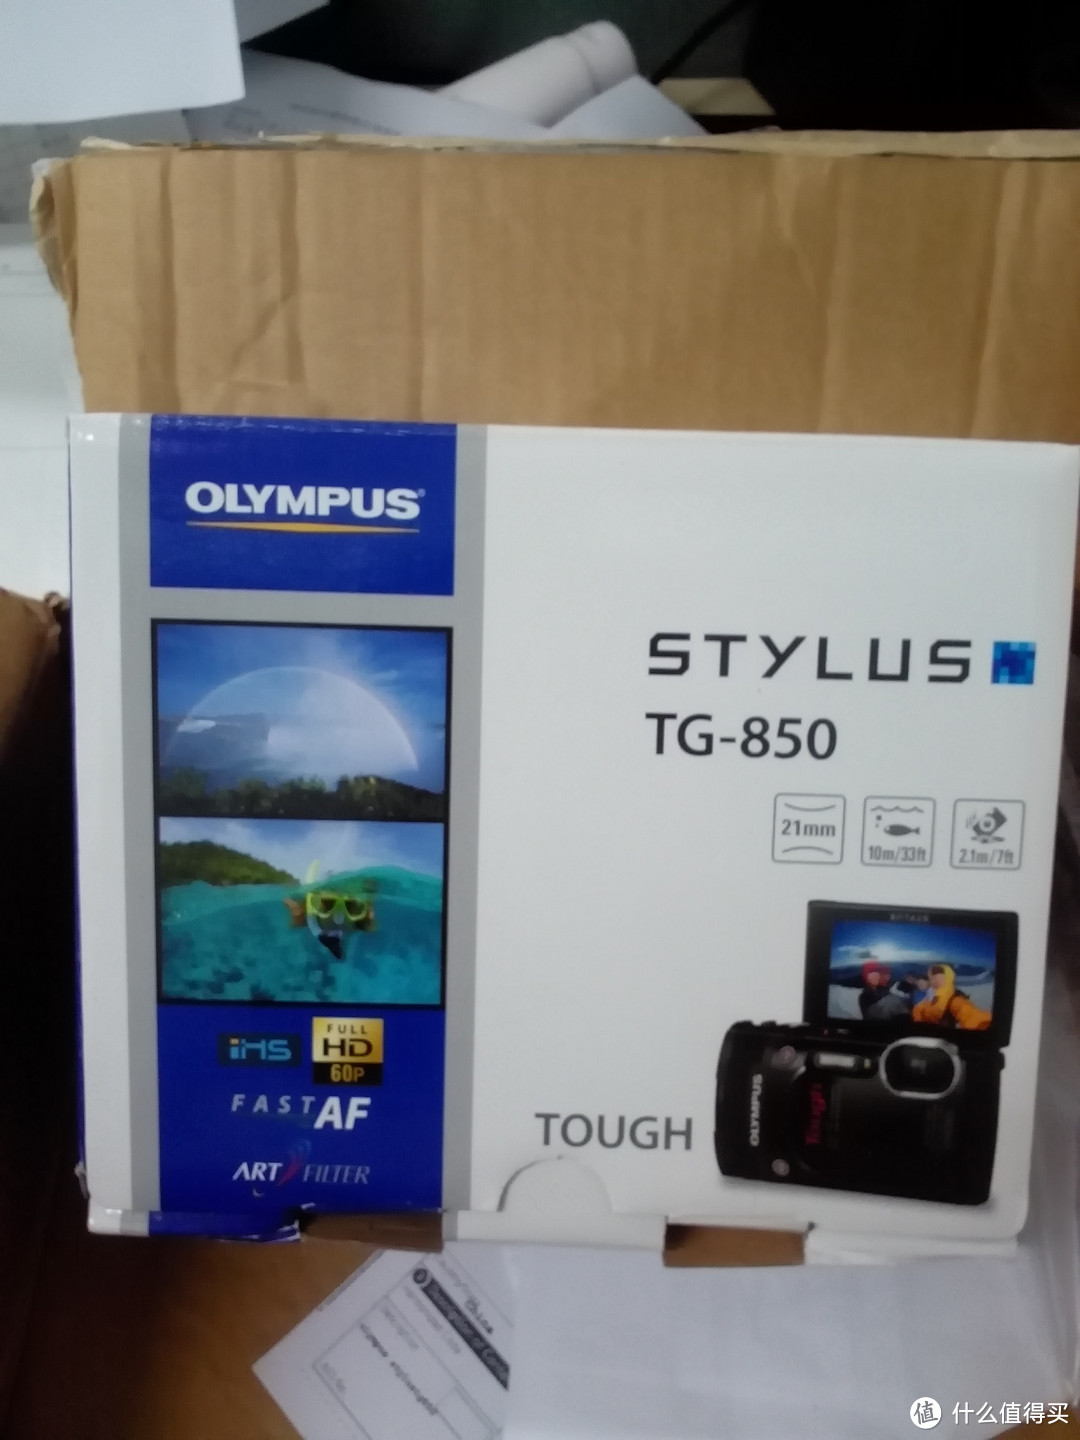 OLYMPUS 奥林巴斯 Stylus Tough TG-850 iHS 五防数码相机